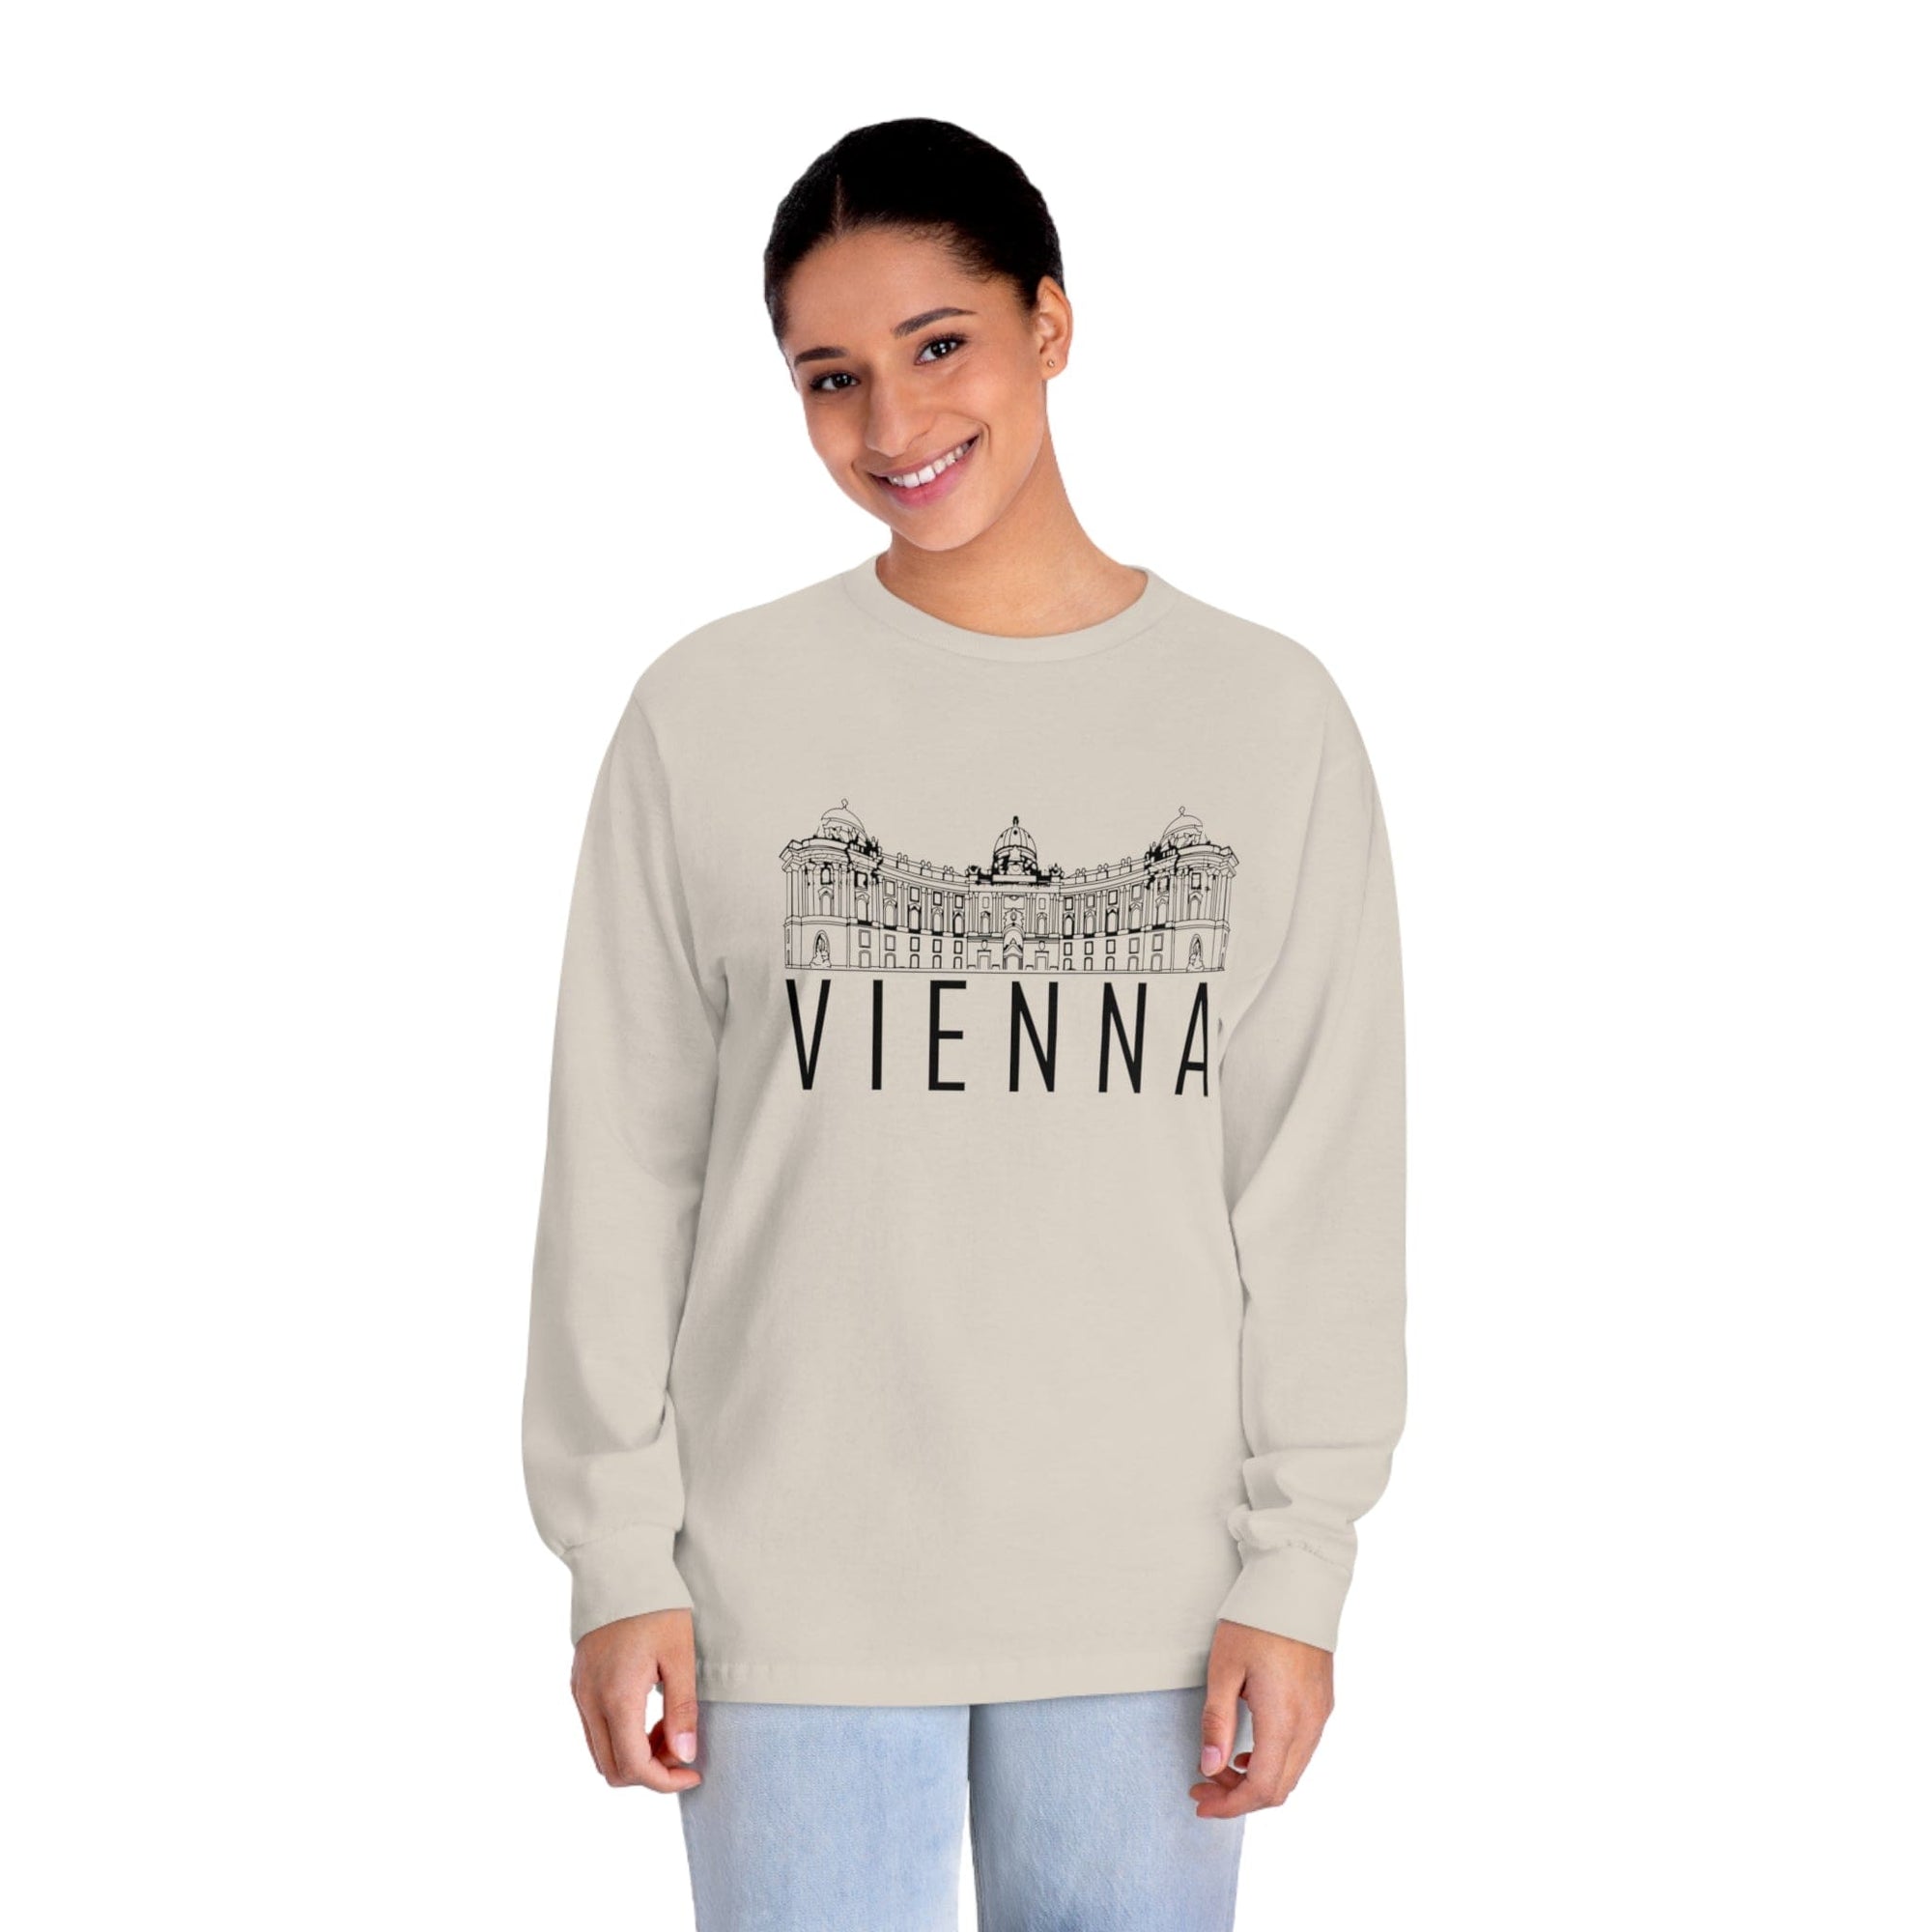 VIENNA – Trendy Design, Premium Long Sleeve Tee